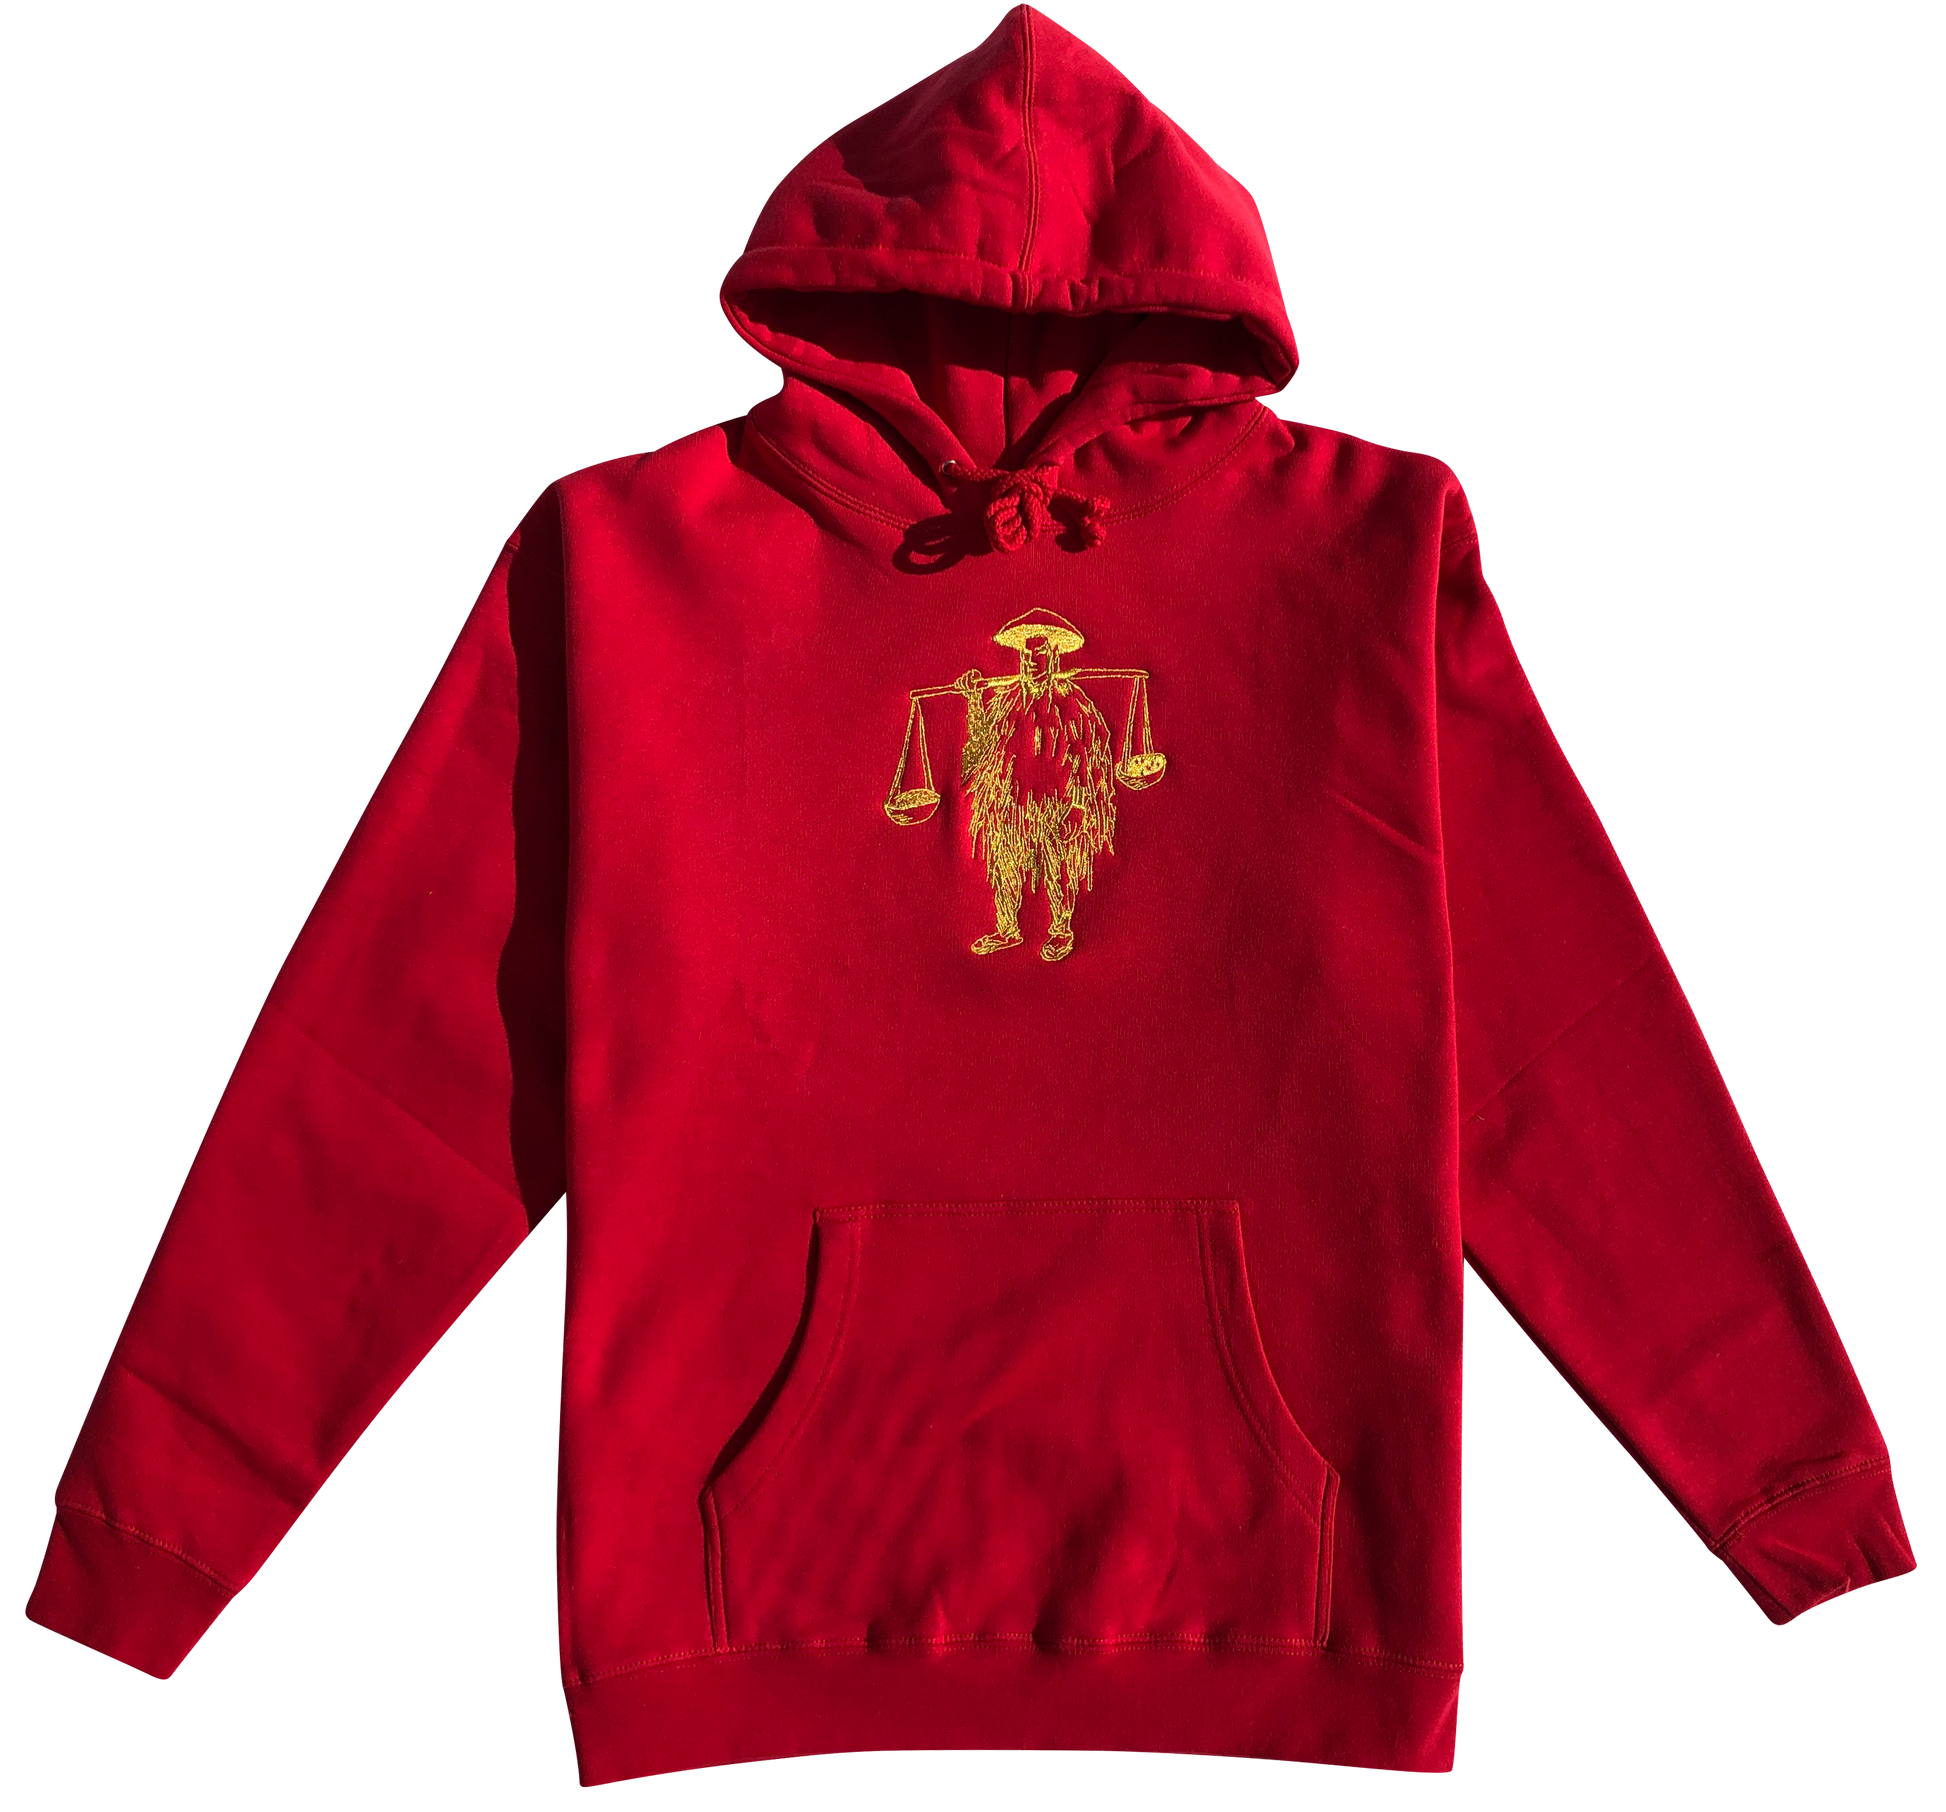 Shotta Man Embroidered Hoodie (Red) - Shotta Spence